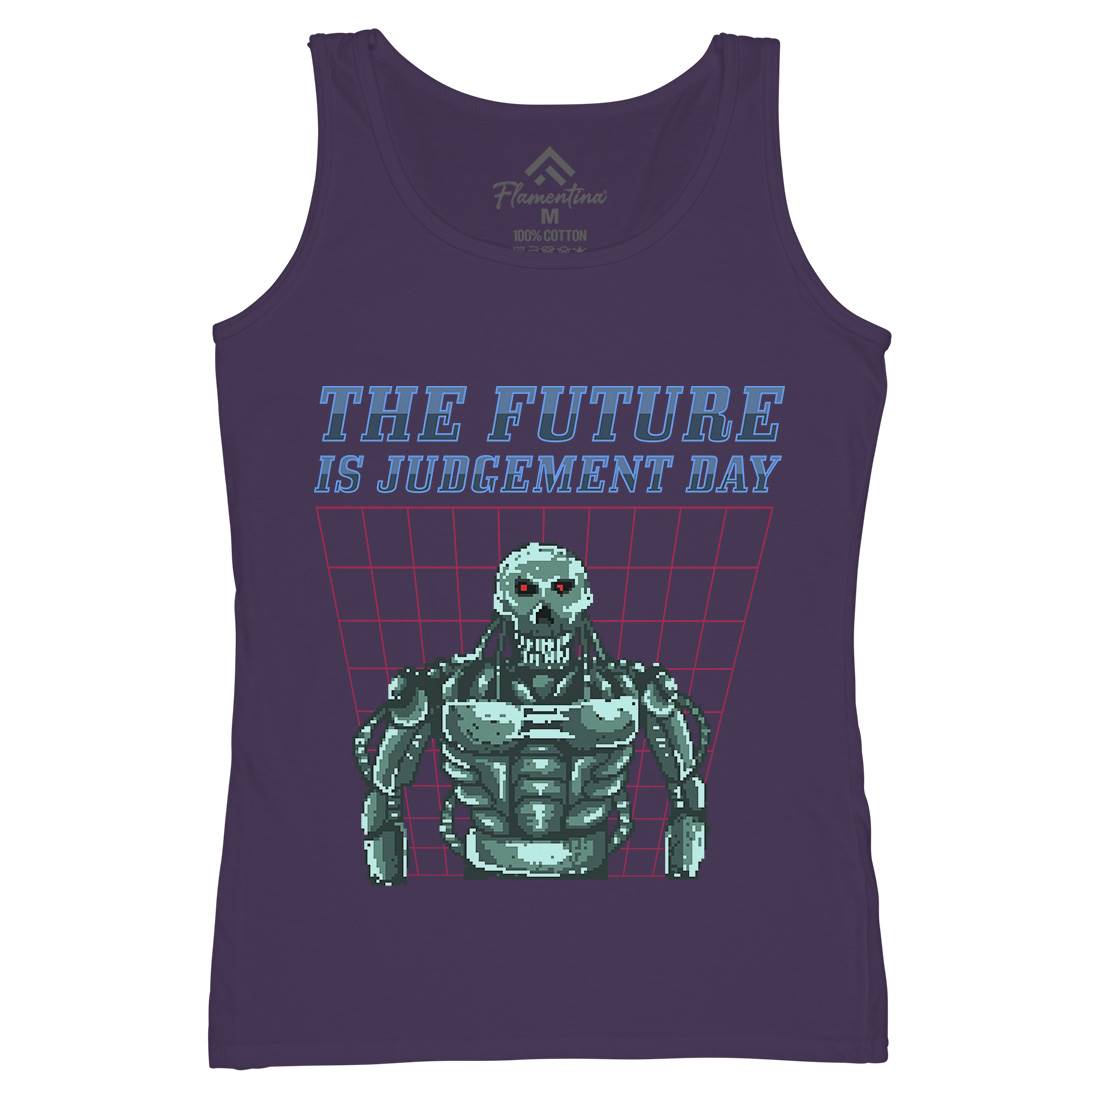 The Future Is Judgement Day Womens Organic Tank Top Vest Horror B968